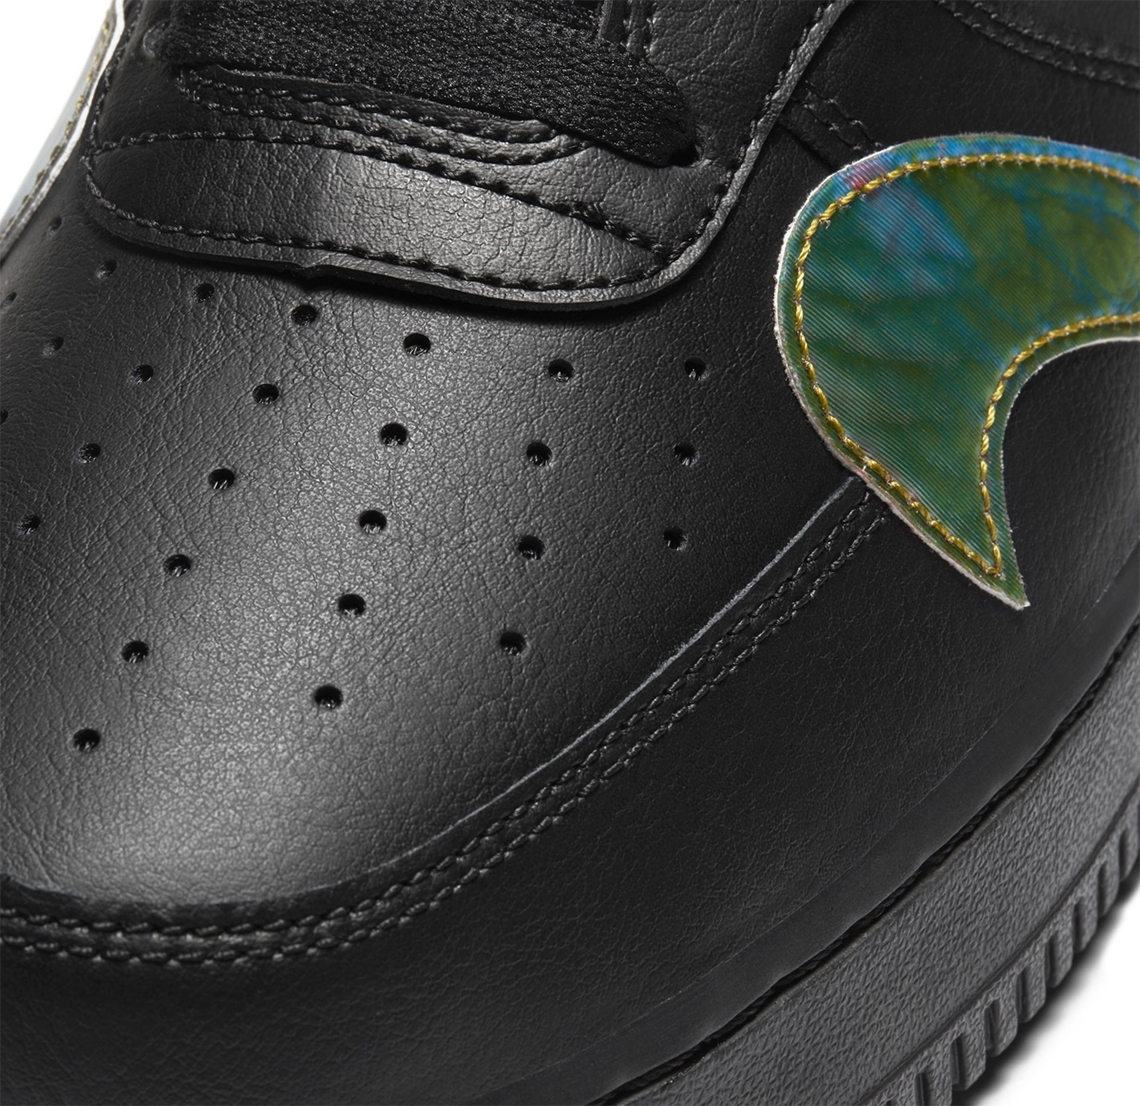 Nike nike black cheetah print shoes clearance sale Black Multi Color 8